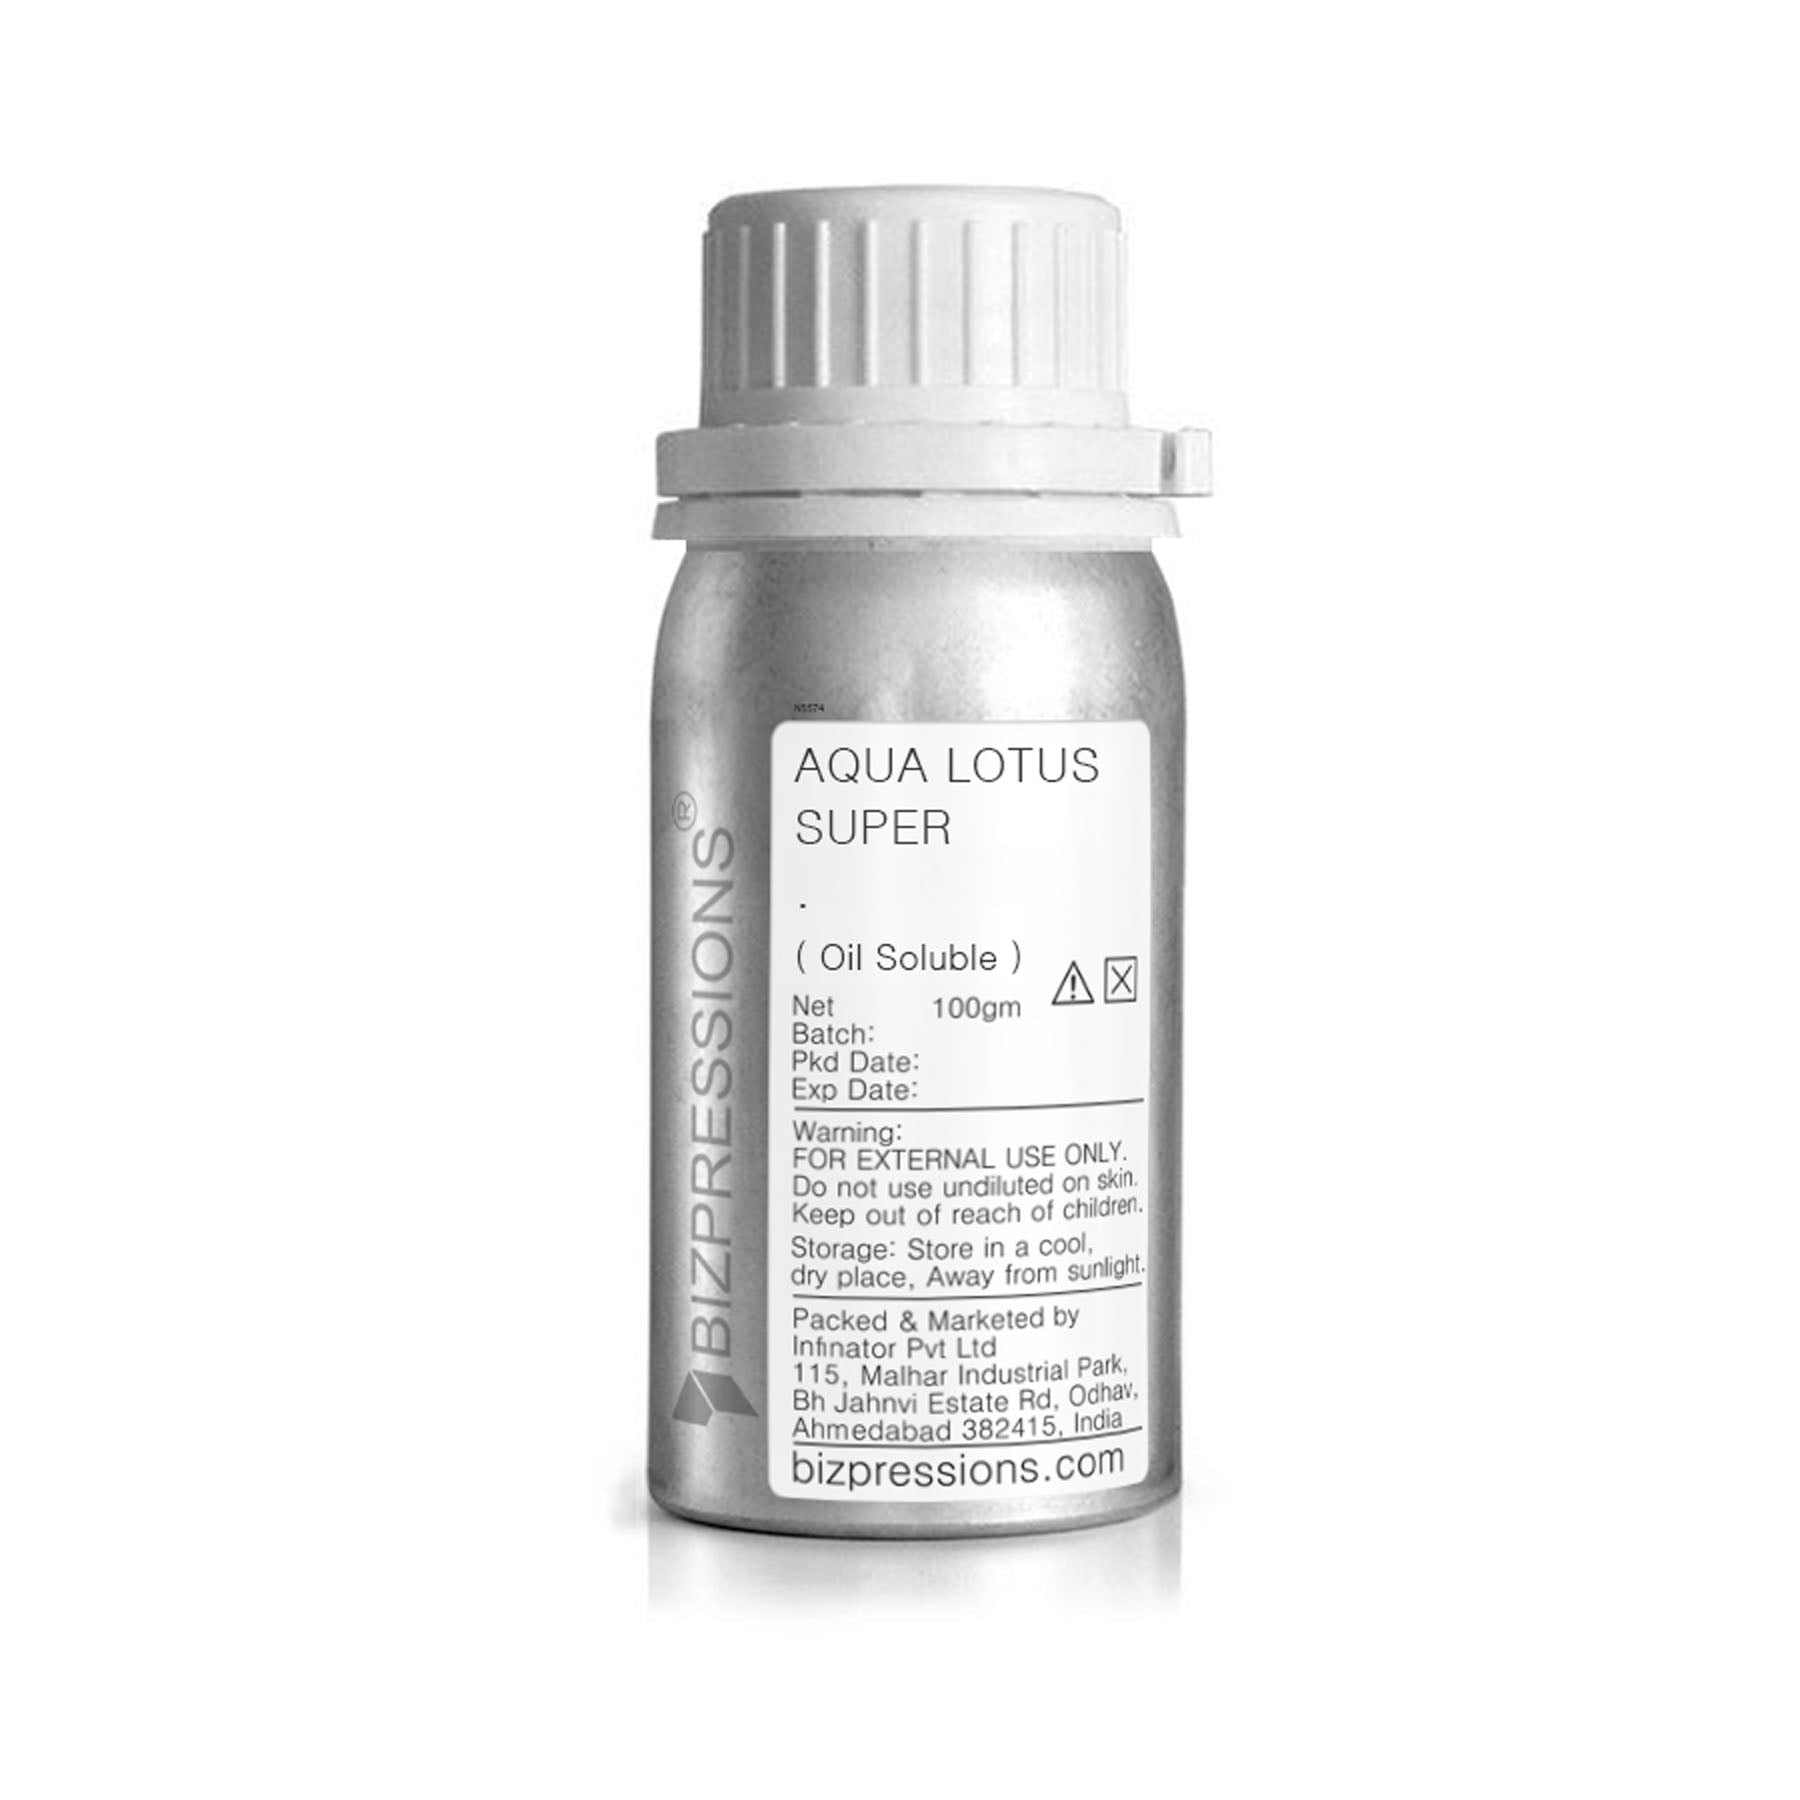 AQUA LOTUS SUPER - Fragrance ( Oil Soluble ) - 100 gm